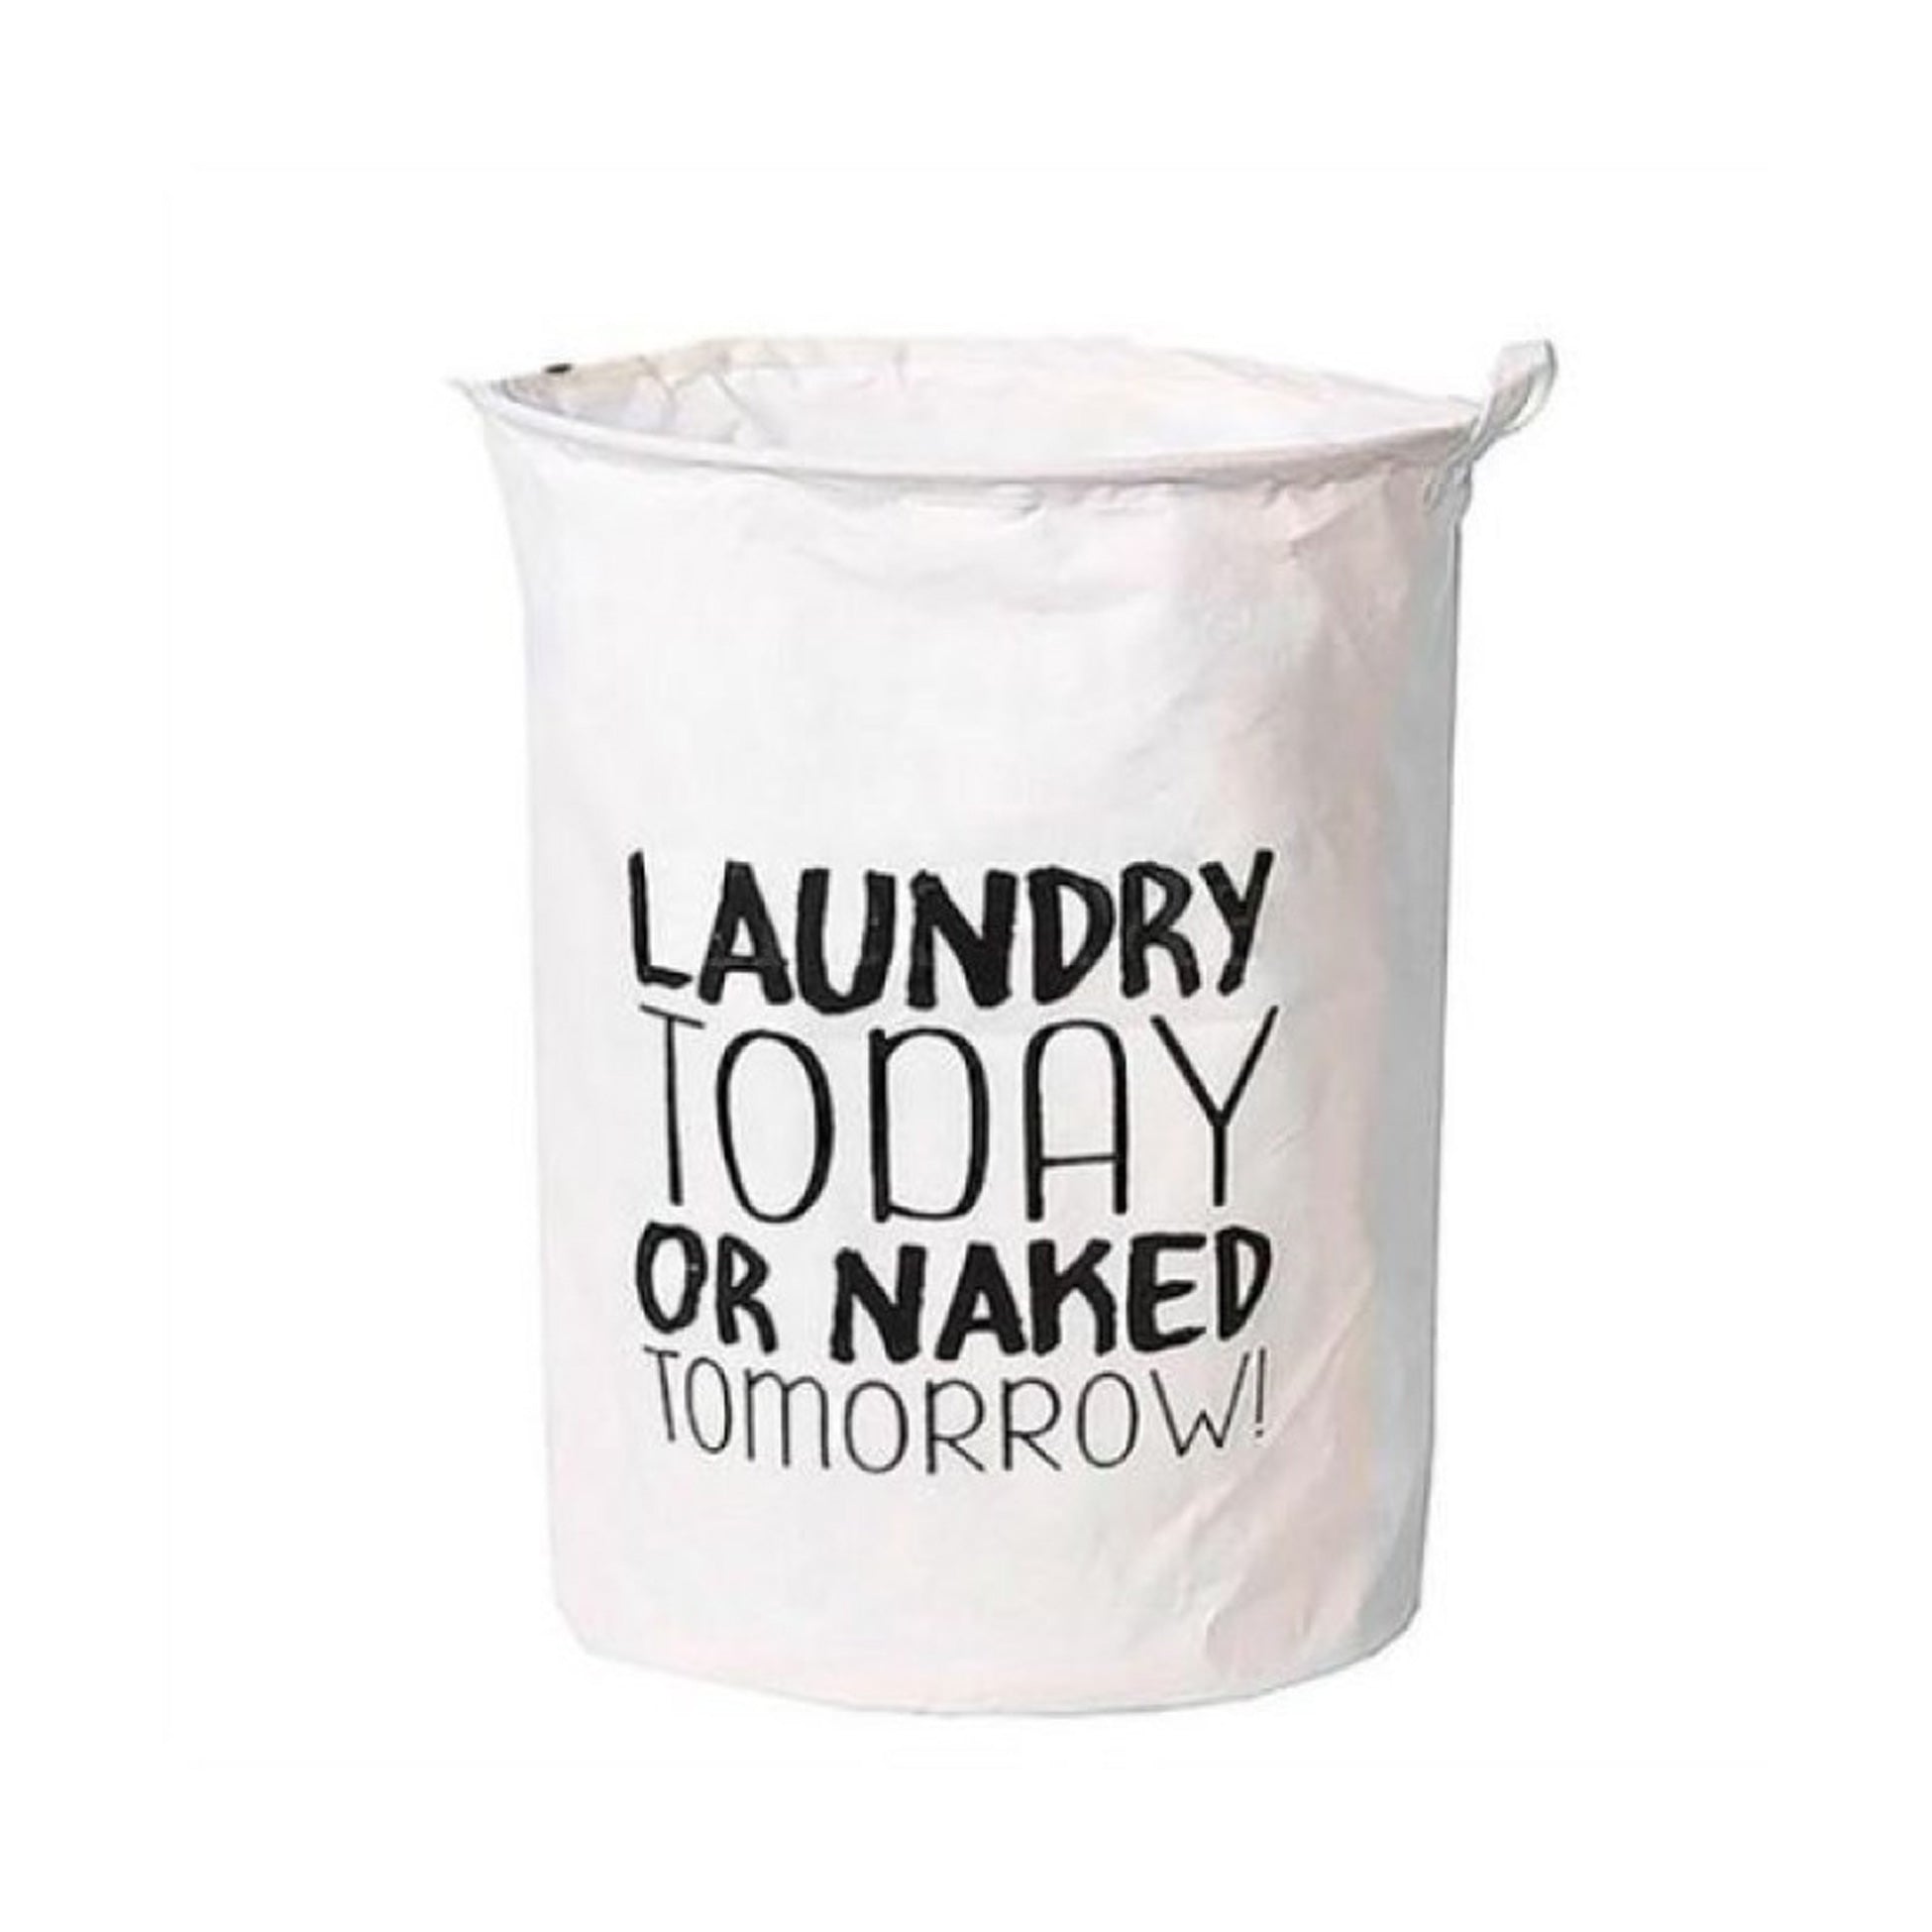 Cesta de Ropa Sucia - Laundry Today or Naked Tomorrow